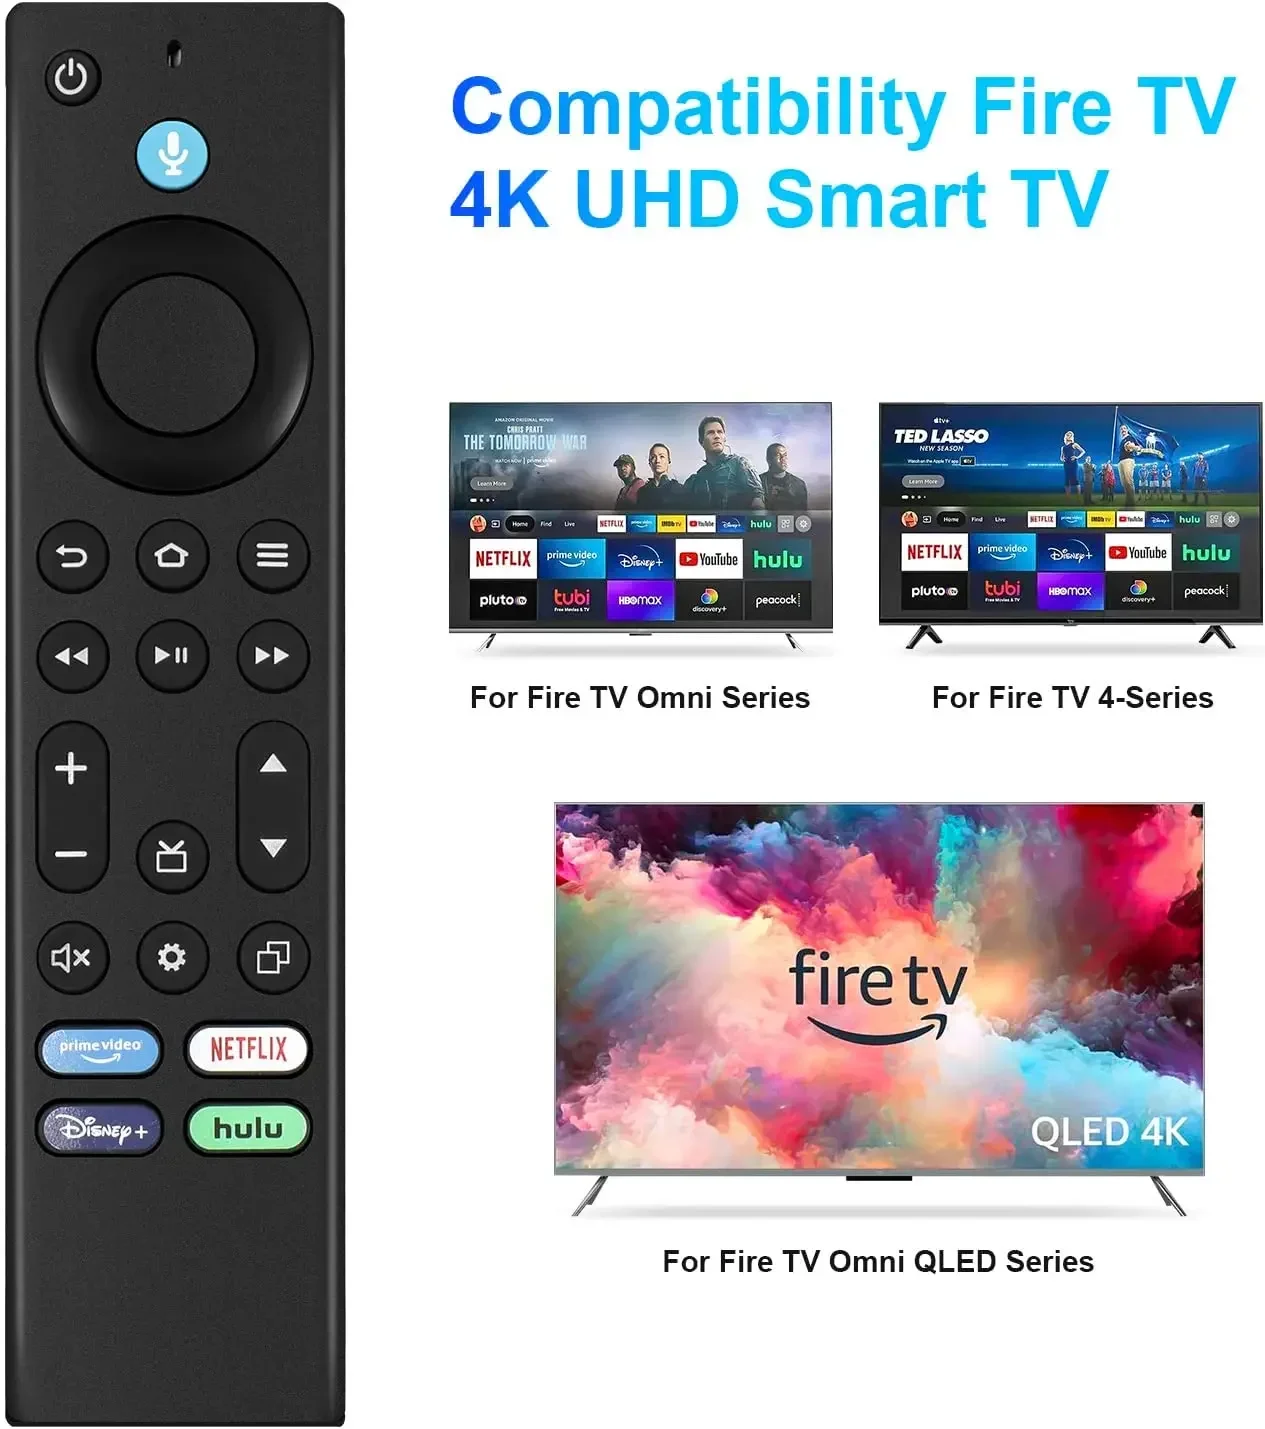 iATV 4K Smart TV Stick 1080P 4K Stickfire 2GB 16GB Quad Core BT4.0 5G WiFi  Firestick Android 10.0 with BT Voice Remote Control fire Stick tv 4k fire